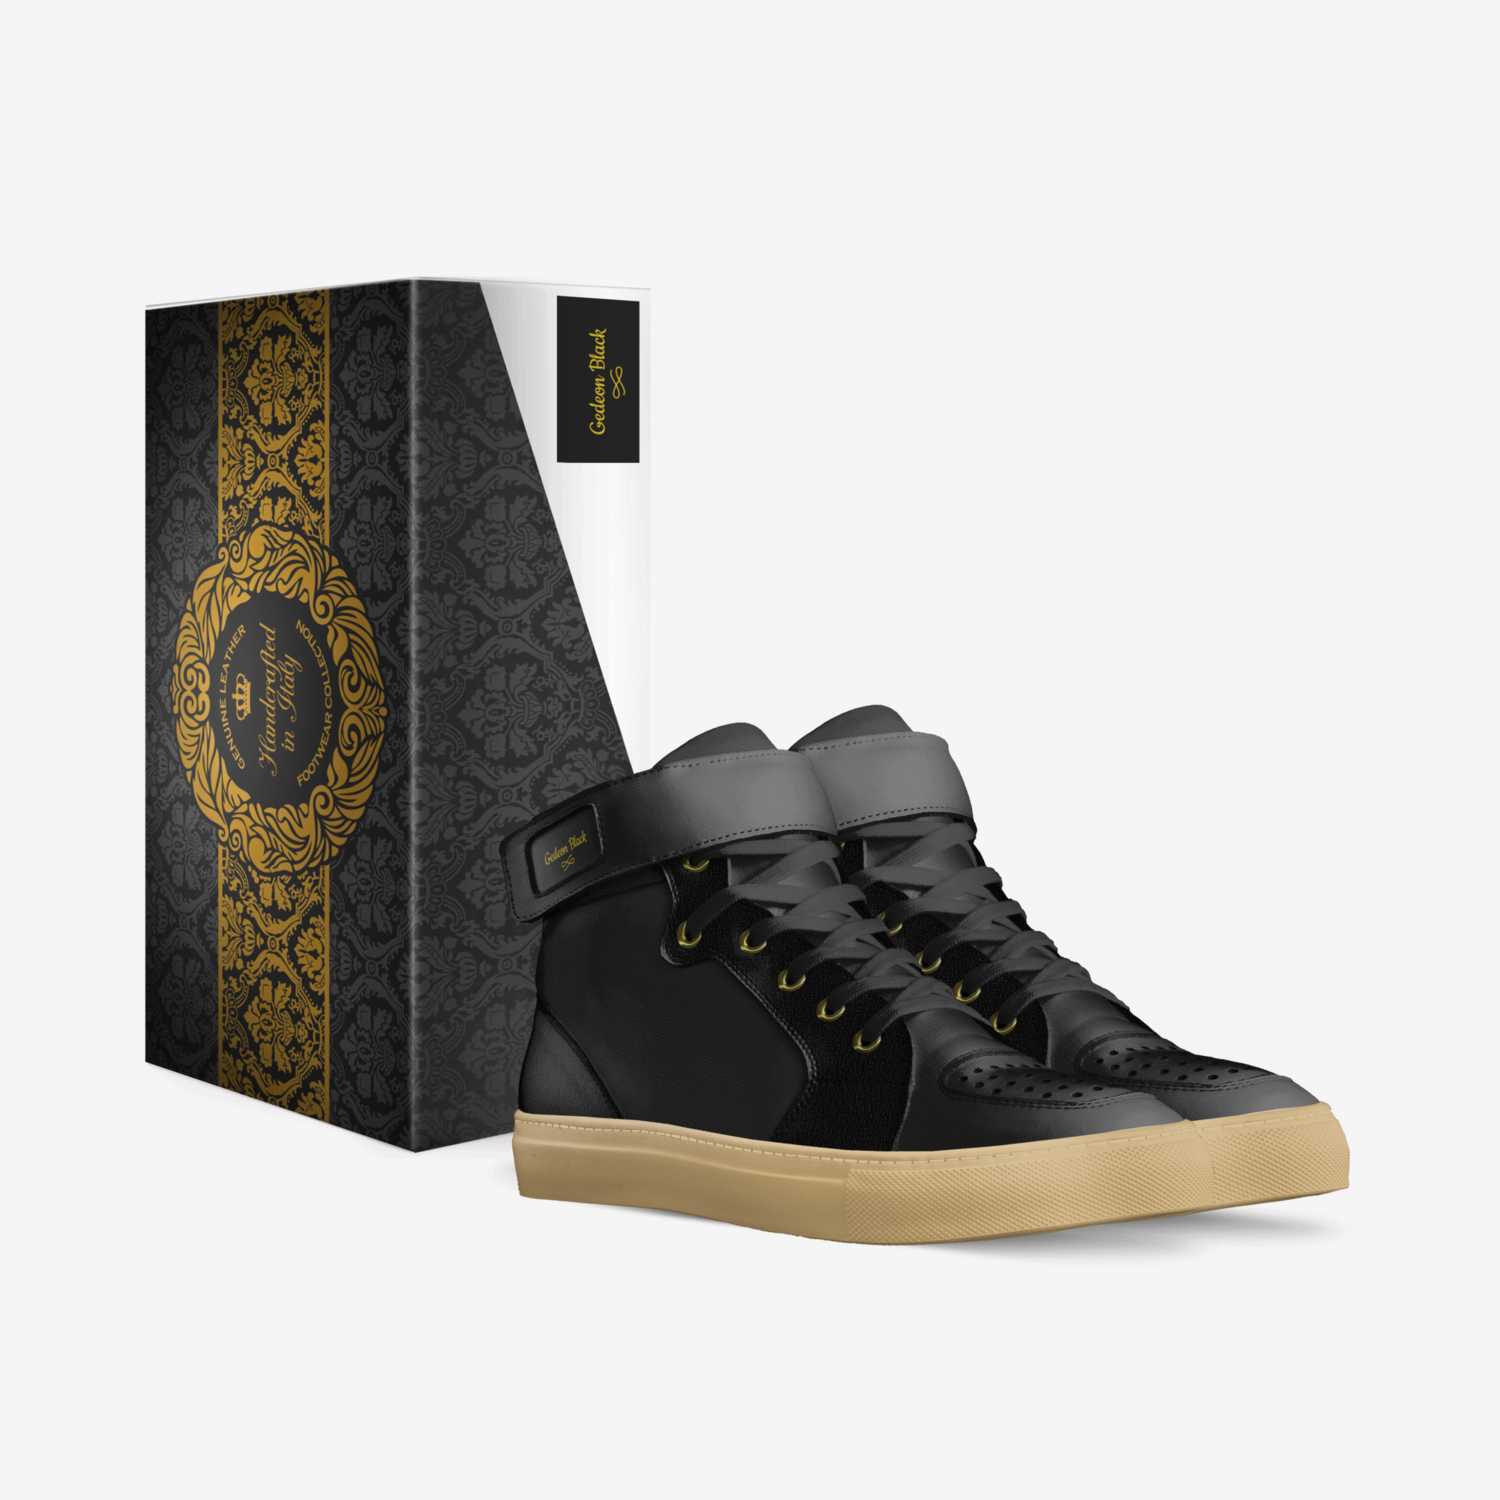 Gedeon Black custom made in Italy shoes by Bls Footwear | Box view